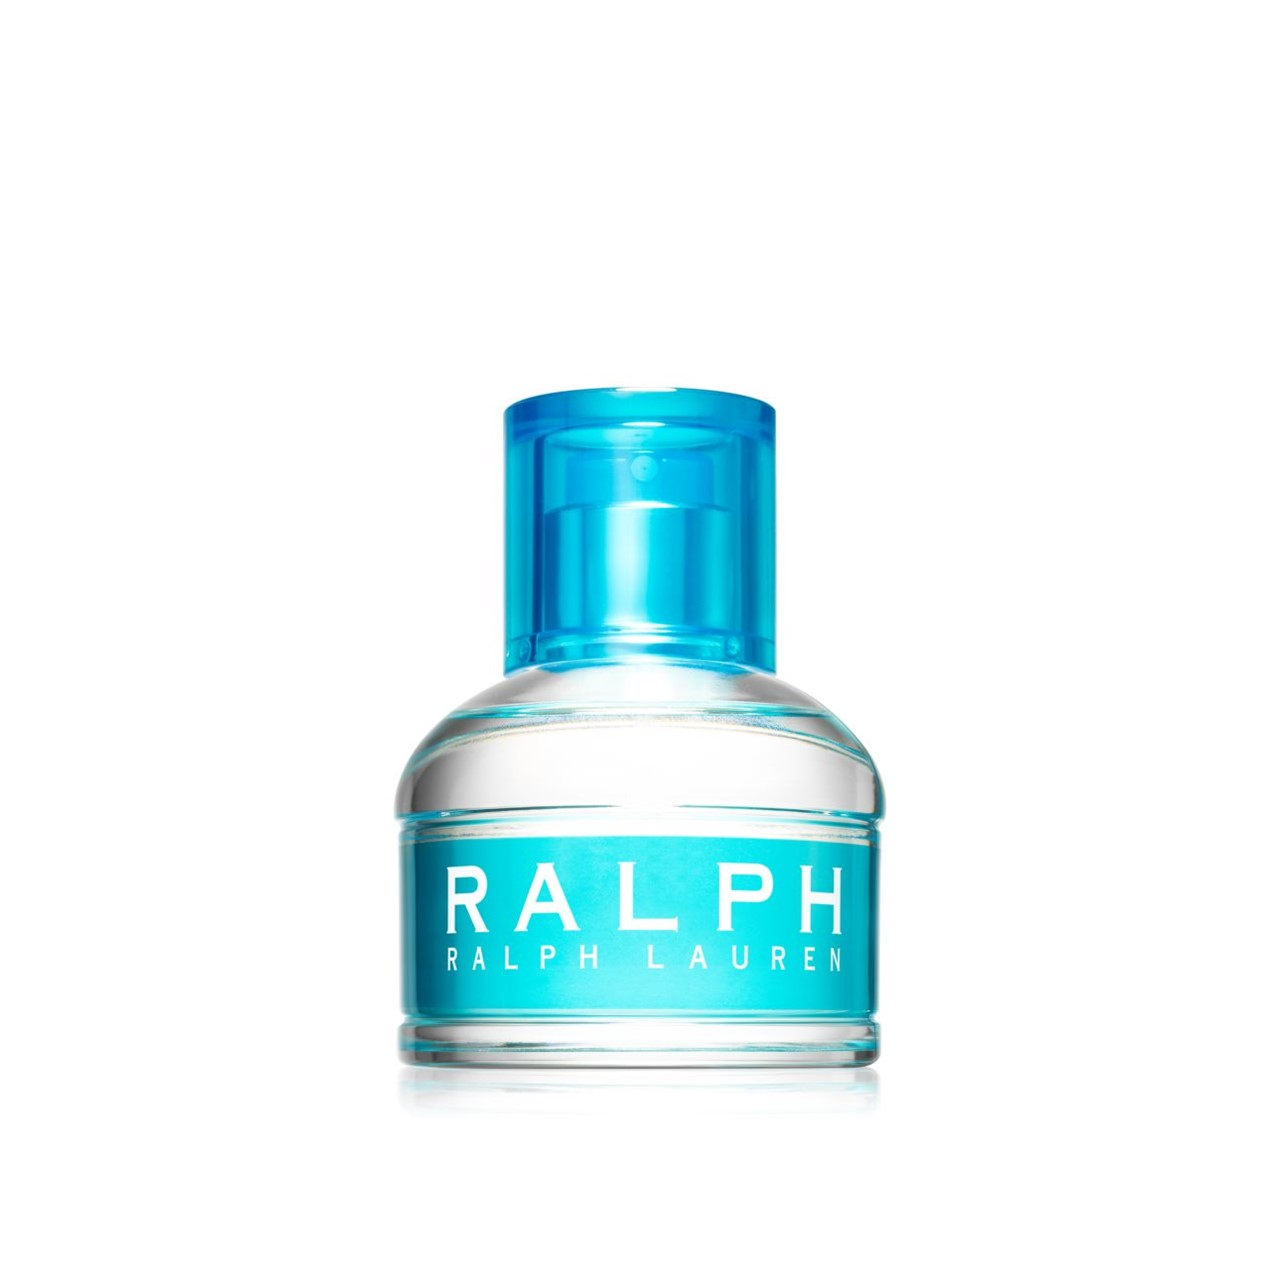 Buy Ralph Lauren Ralph Toilette oz) (1.0fl 30ml · Eau USA de